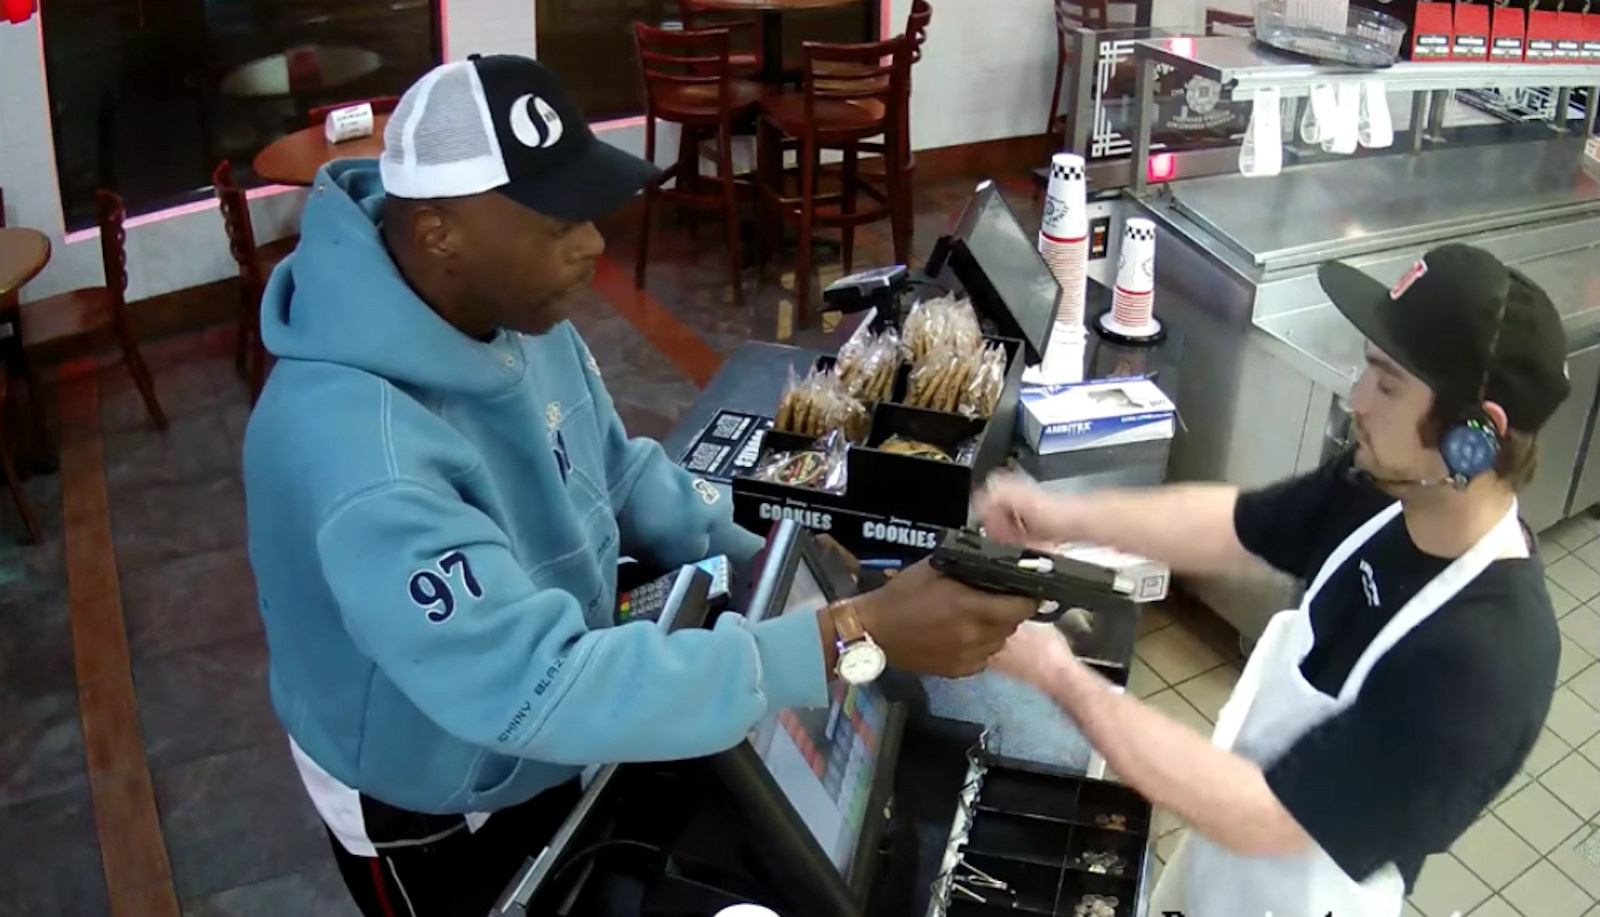 jimmy john's robbery video: cashier unfazed by robber's handgun